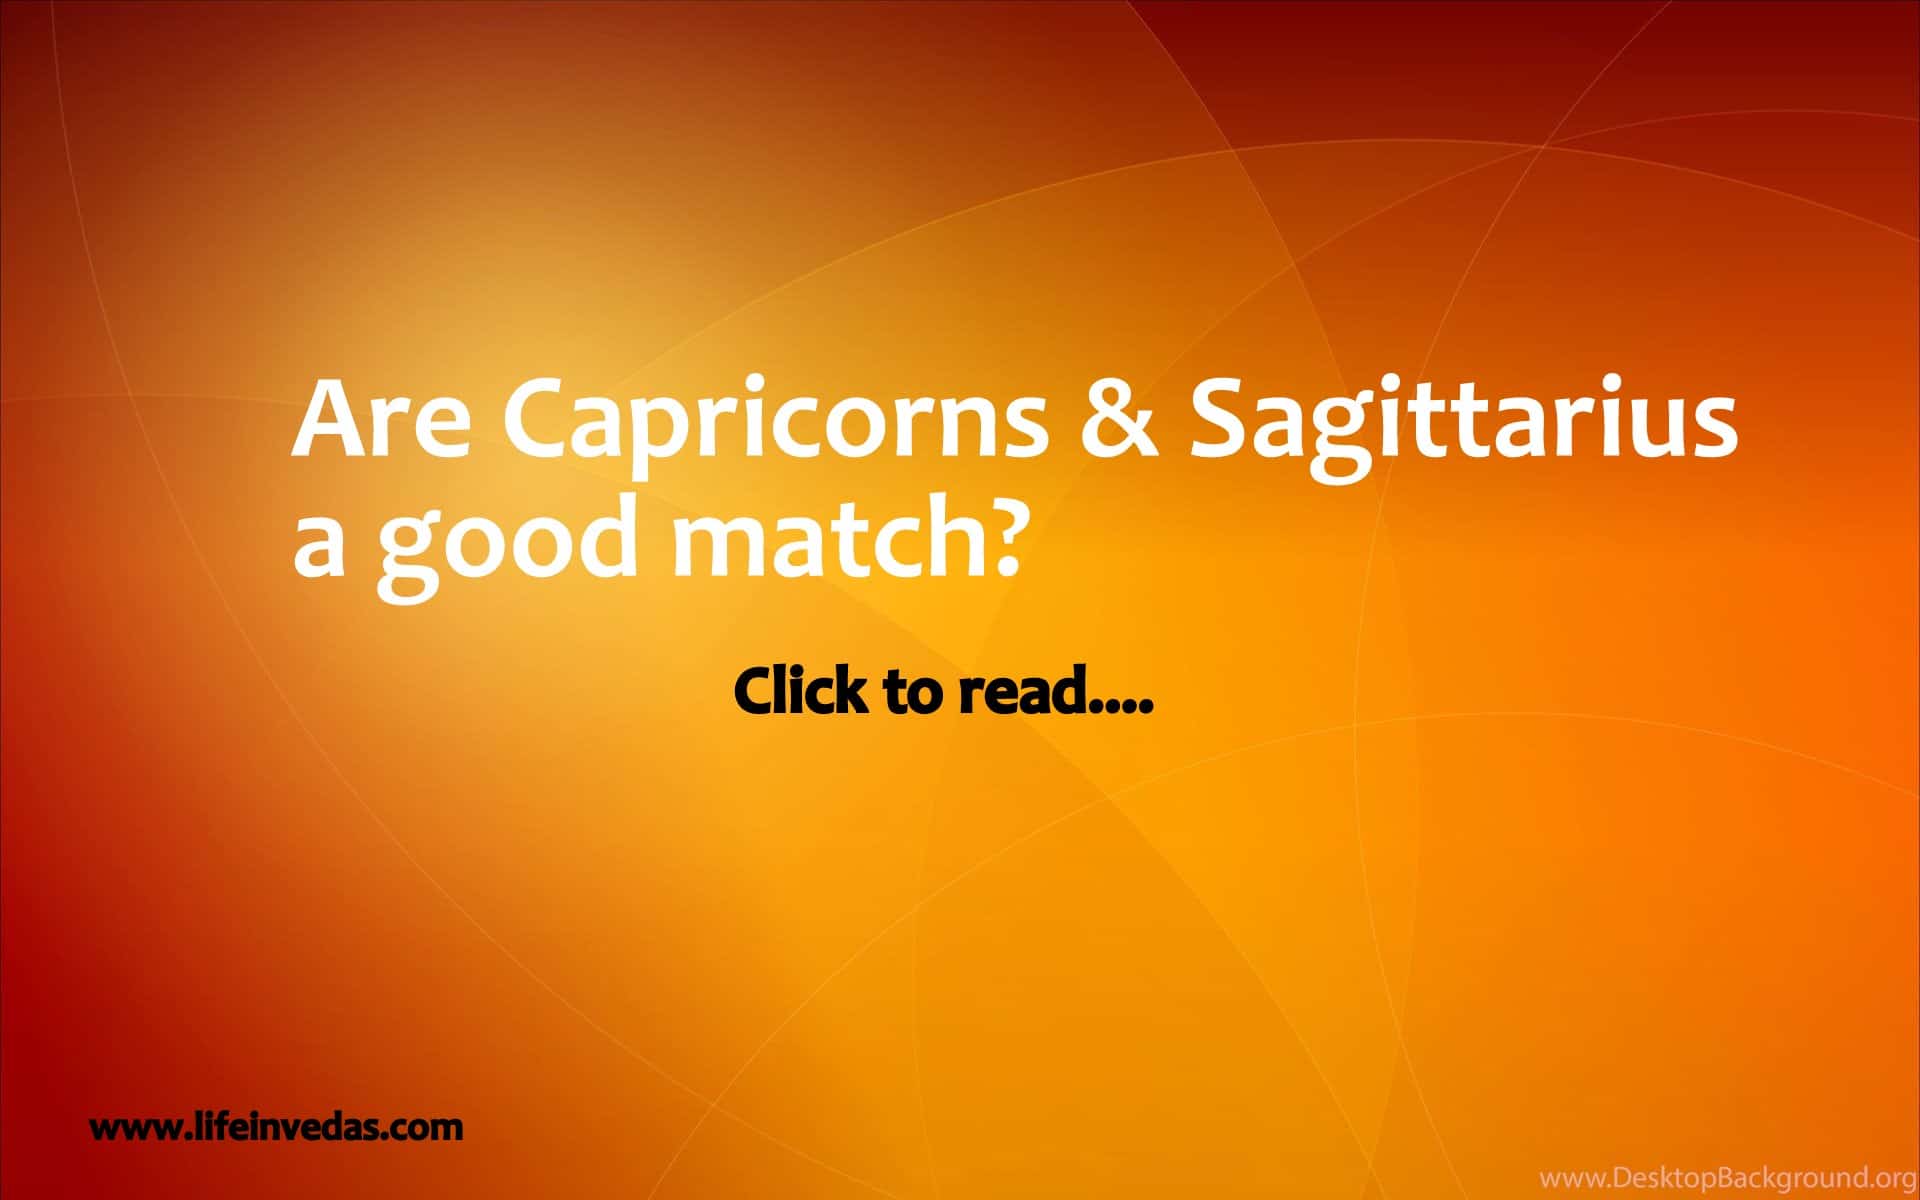 Why does Sagittarius like Capricorn?